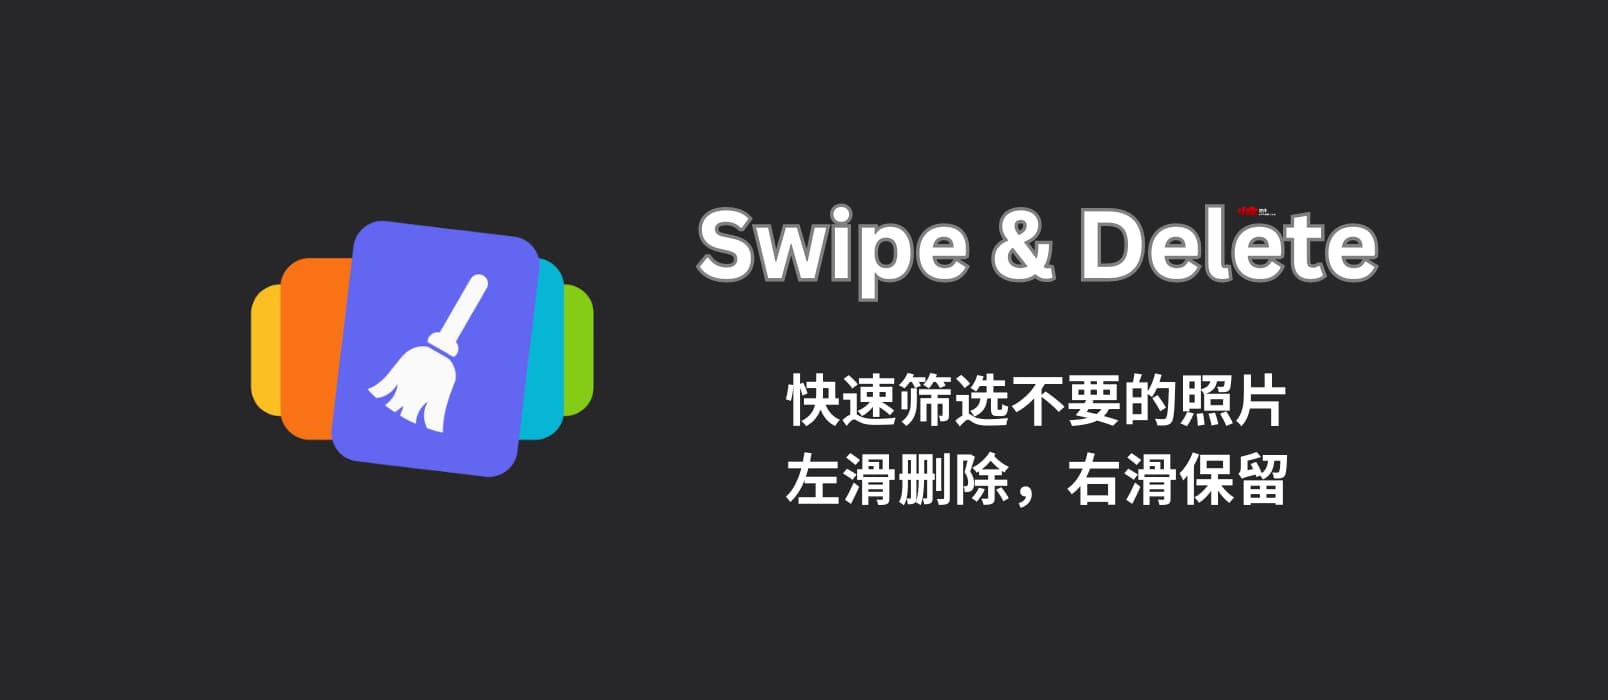 Swipe & Delete - 快速筛选不要的照片：左滑删除，右滑保留[iOS/Android] 1